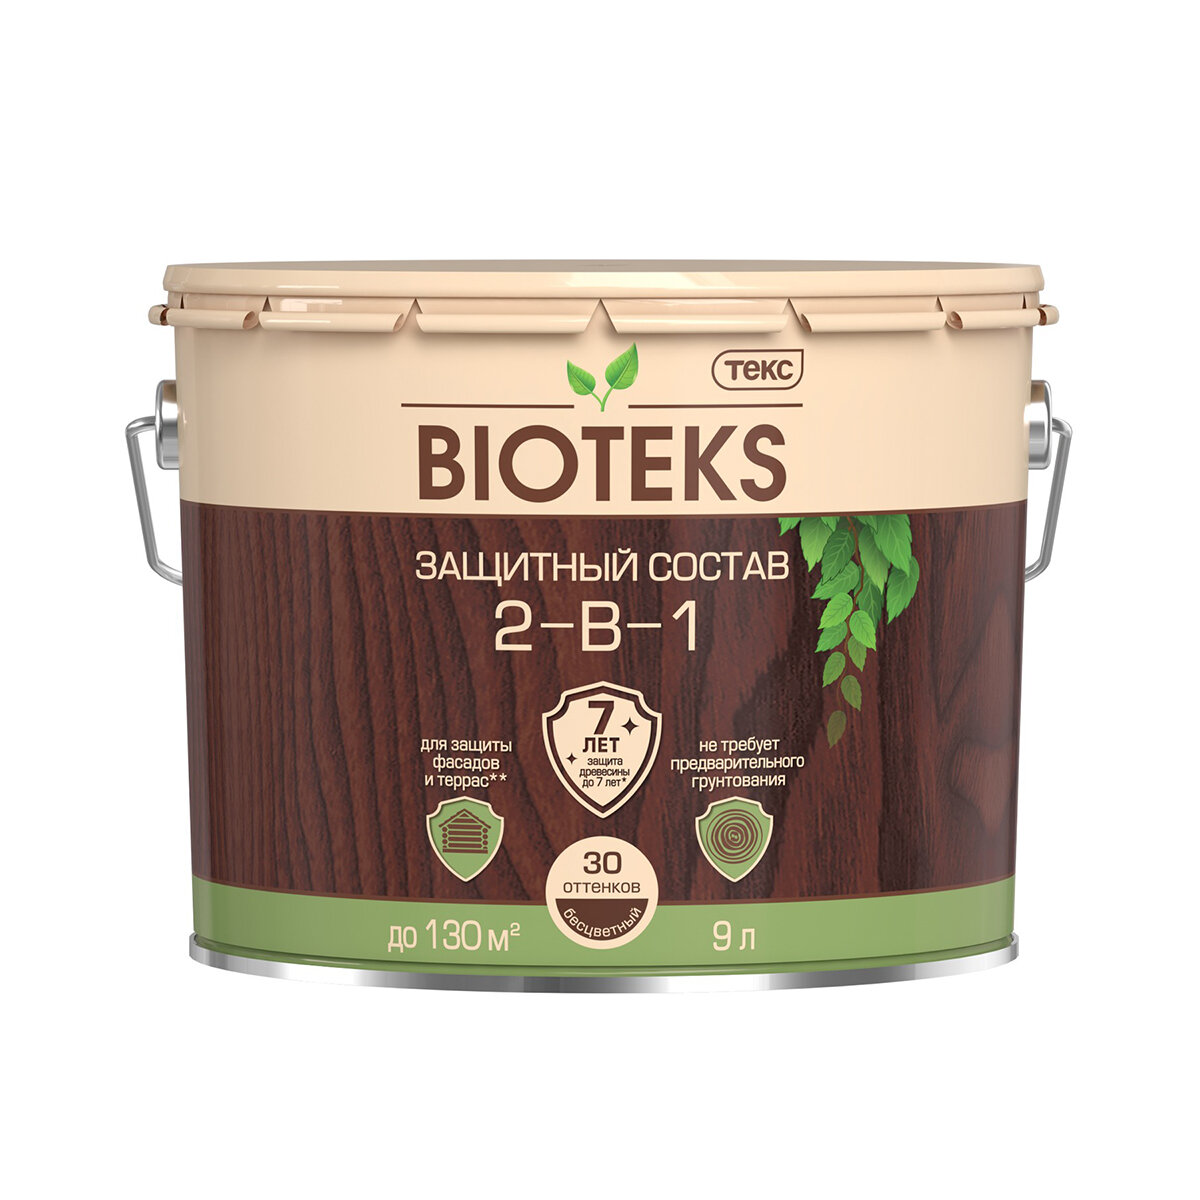      Bioteks 2--1, 9 , 